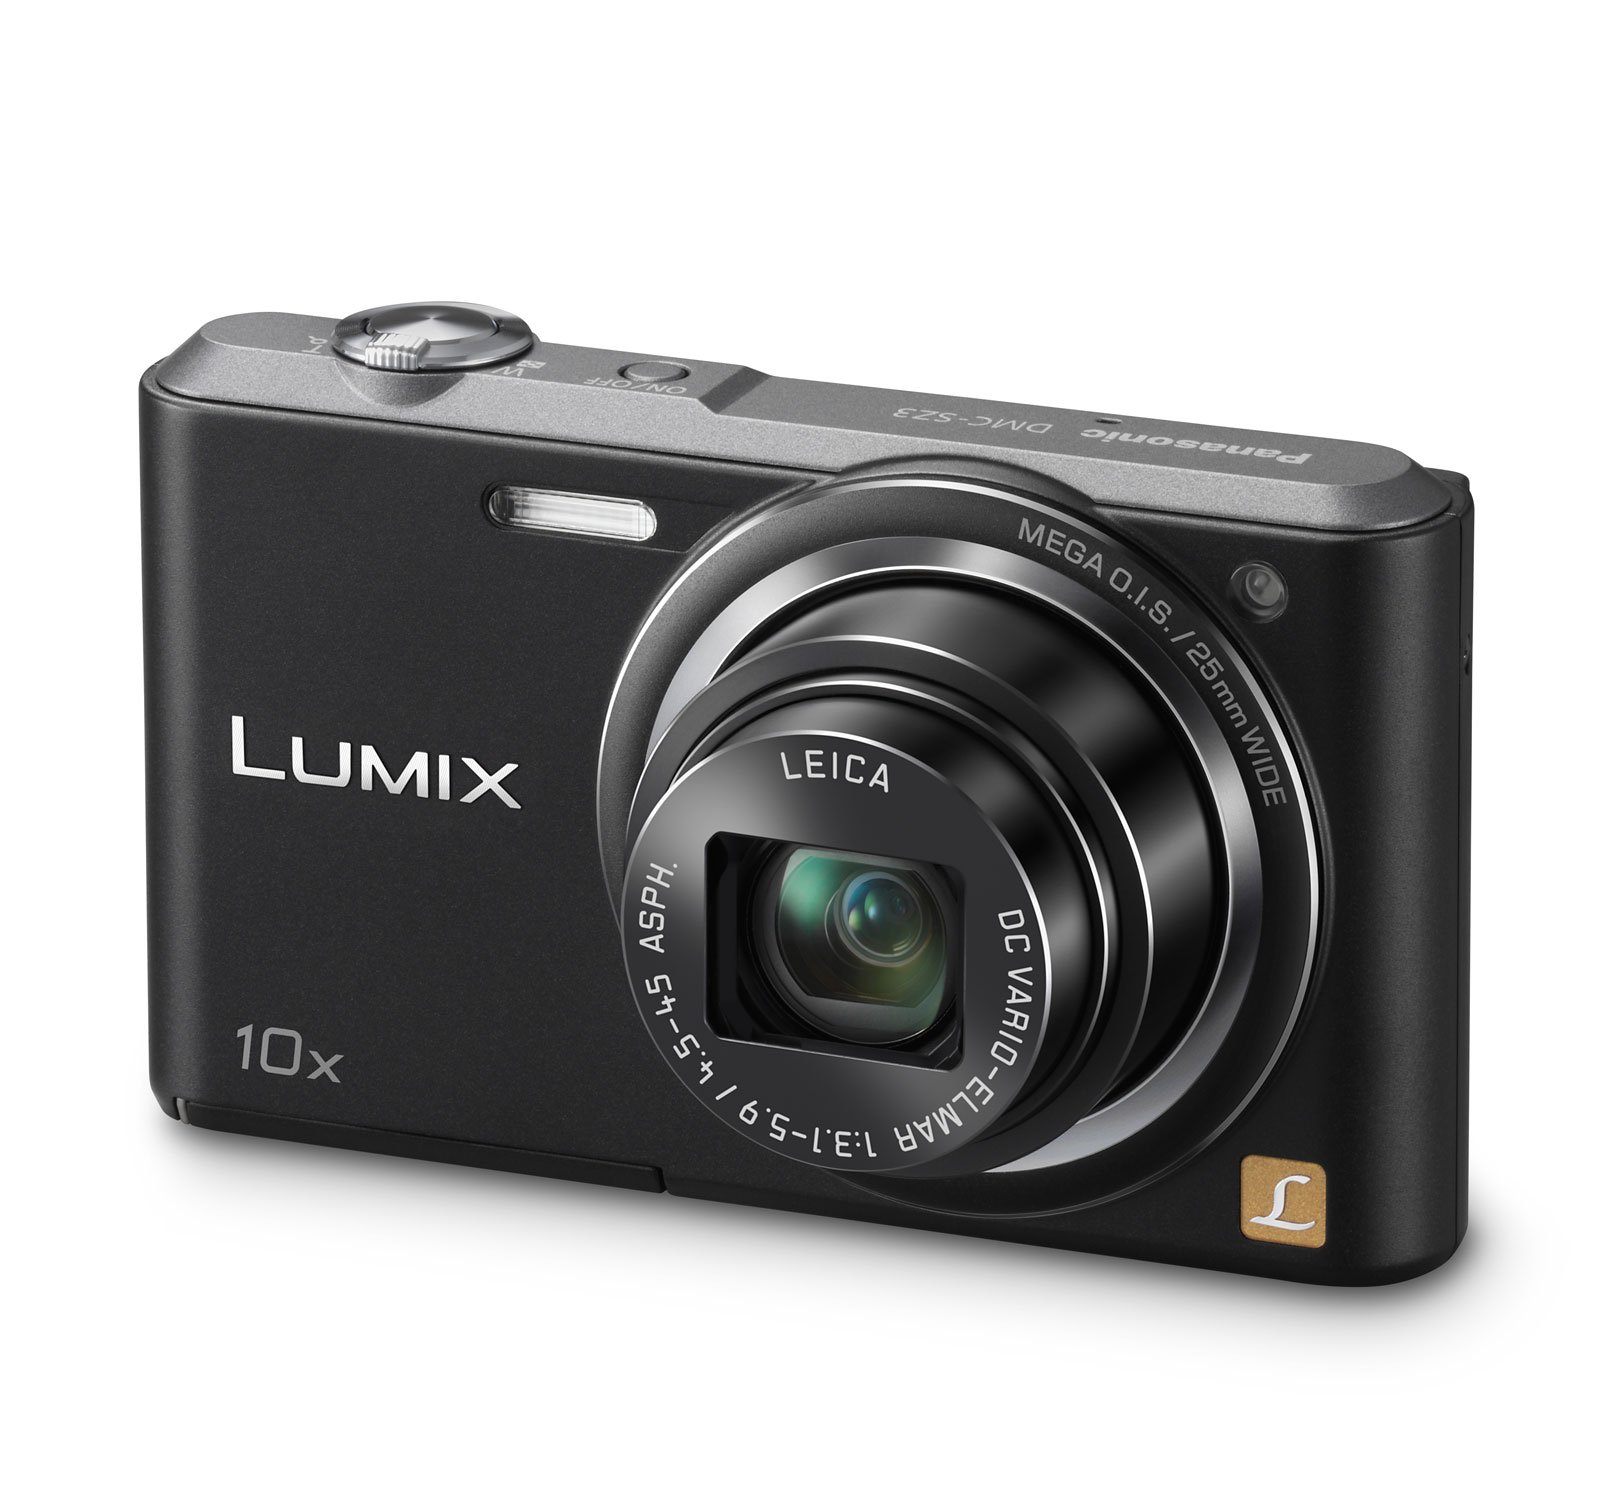 Panasonic Lumix DMC-SZ3 16.1 MP Compact Digital Camera with20x Intelligent Zoom (Black) (OLD MODEL)